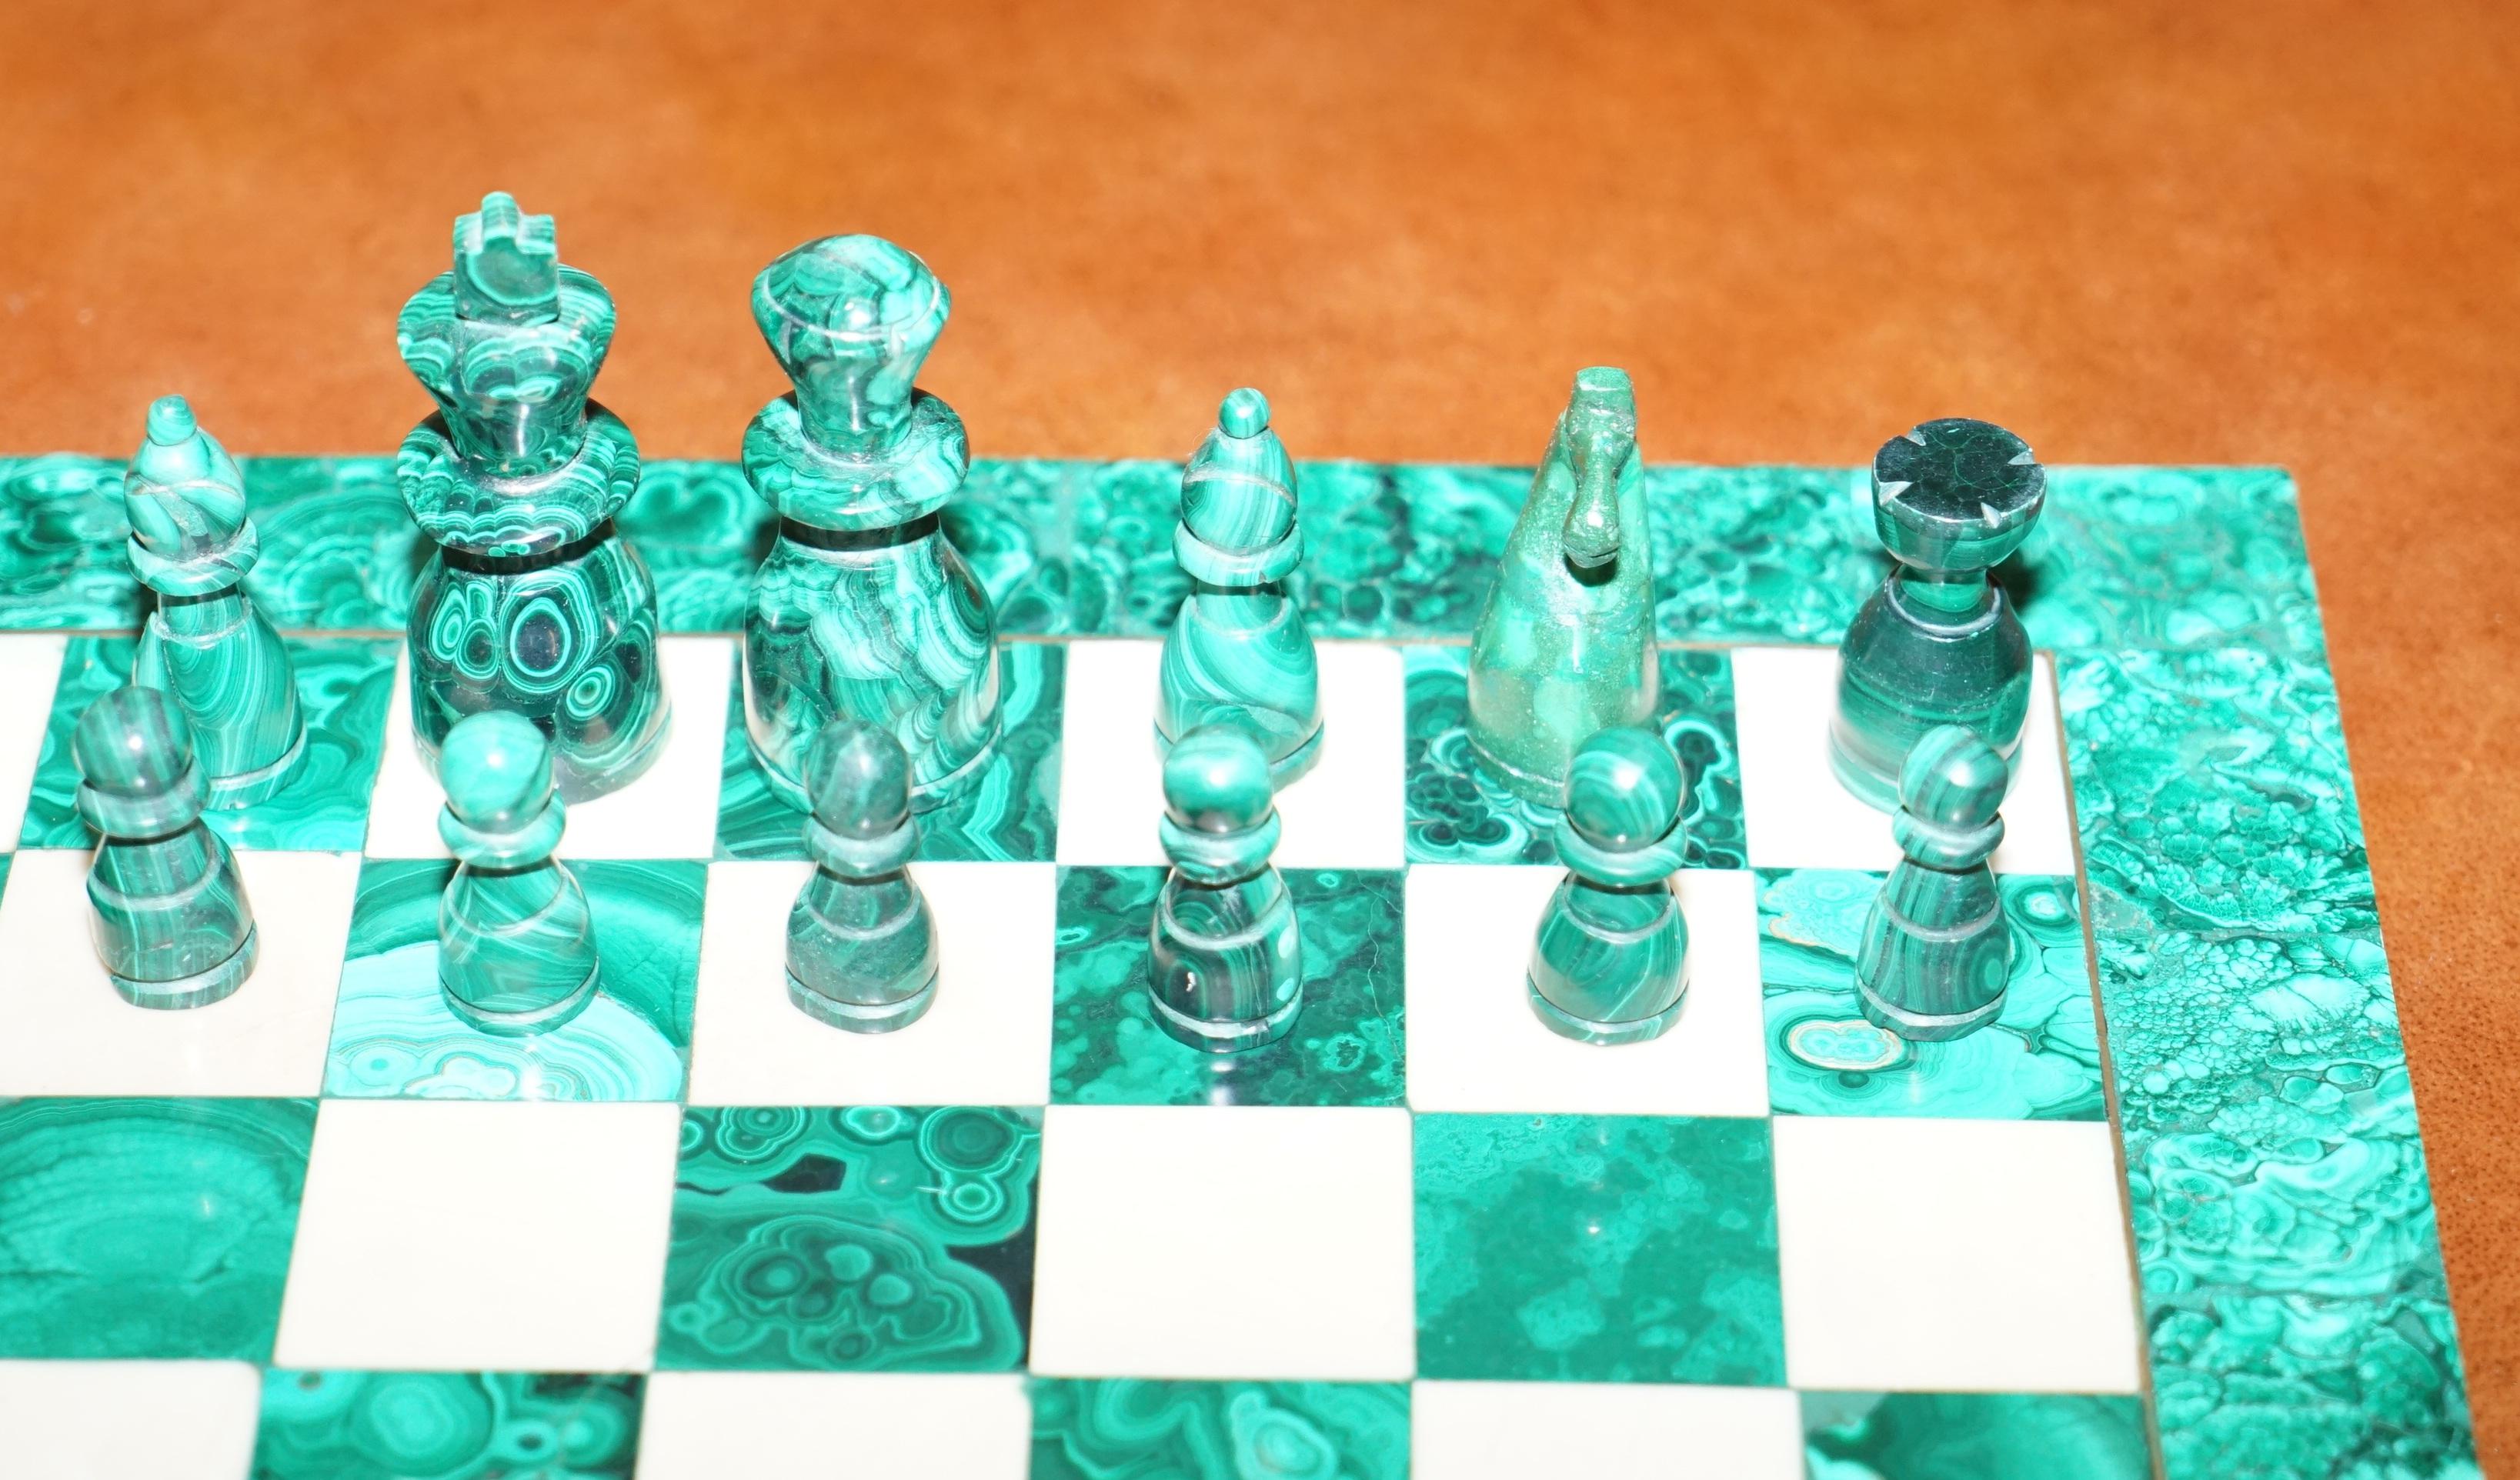 malachite chess board